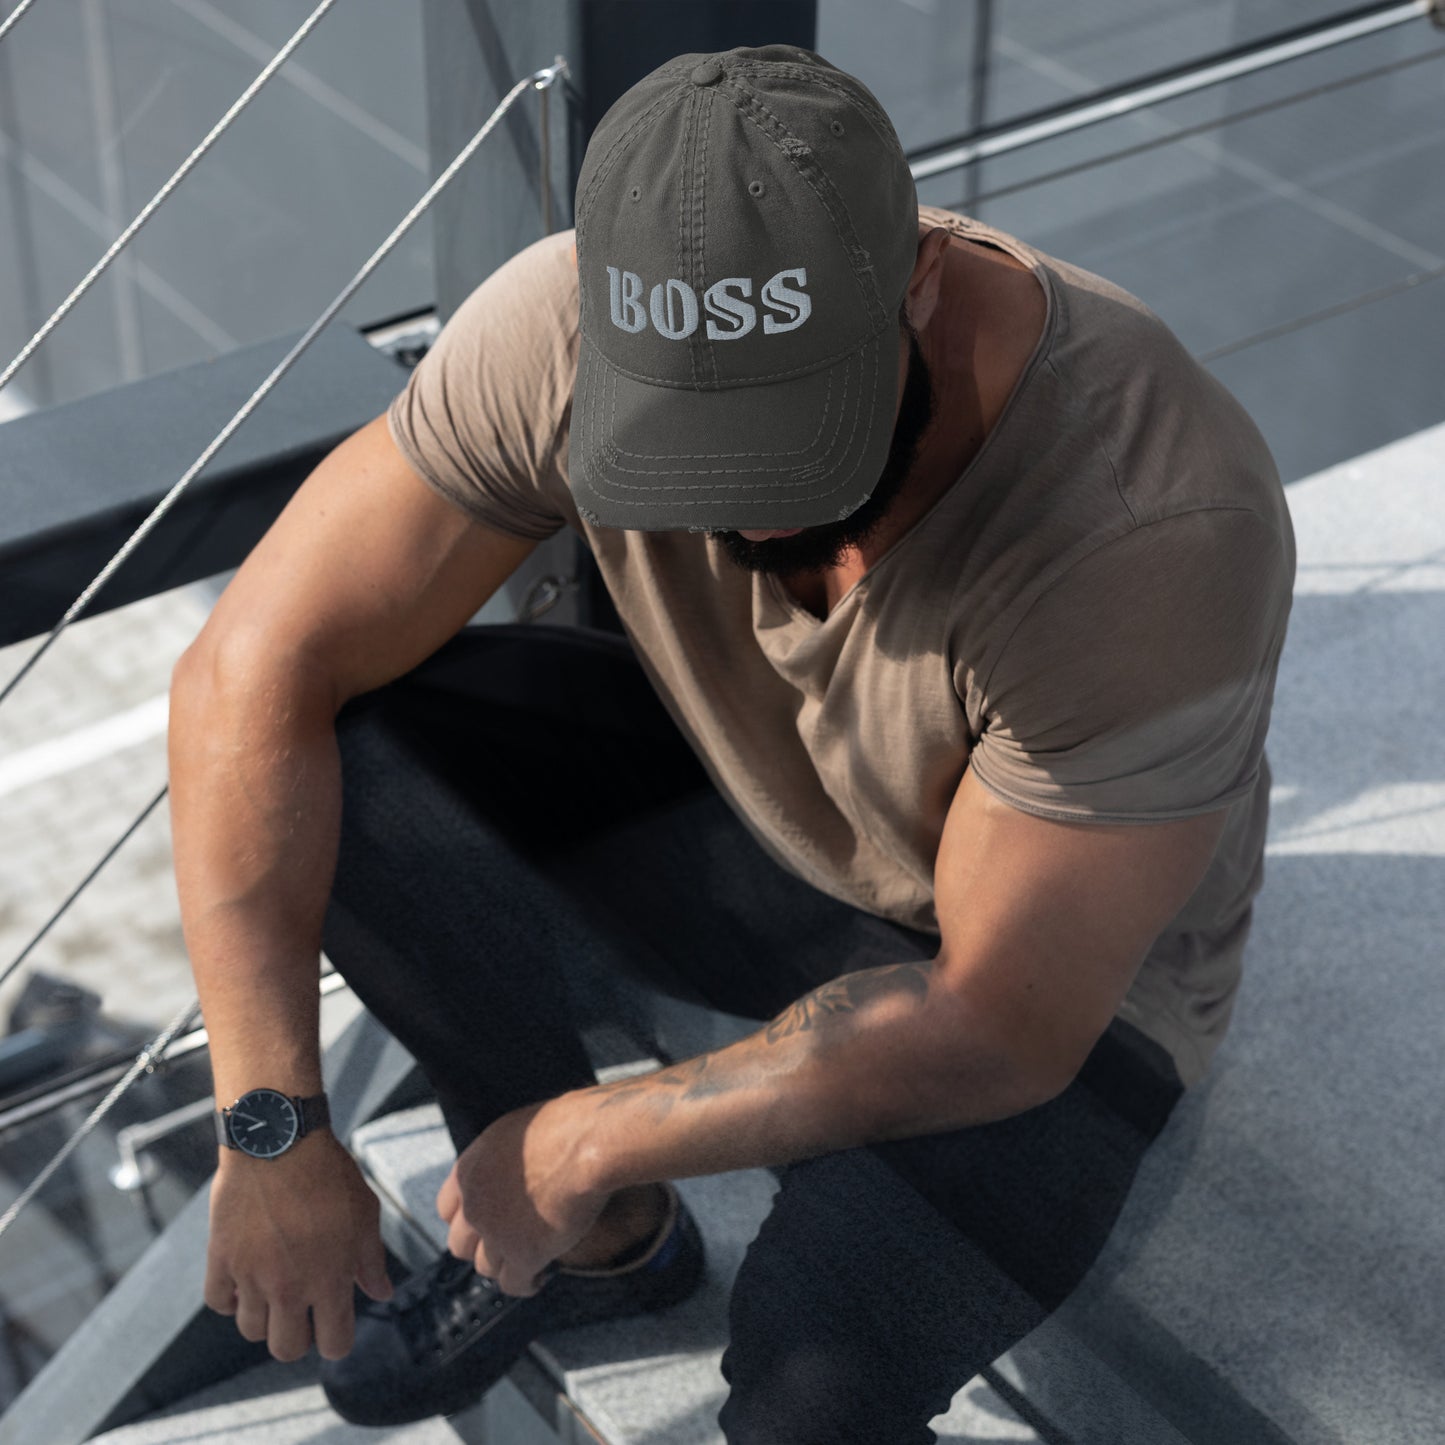 "Boss" lippis (kulutettu dad cap)